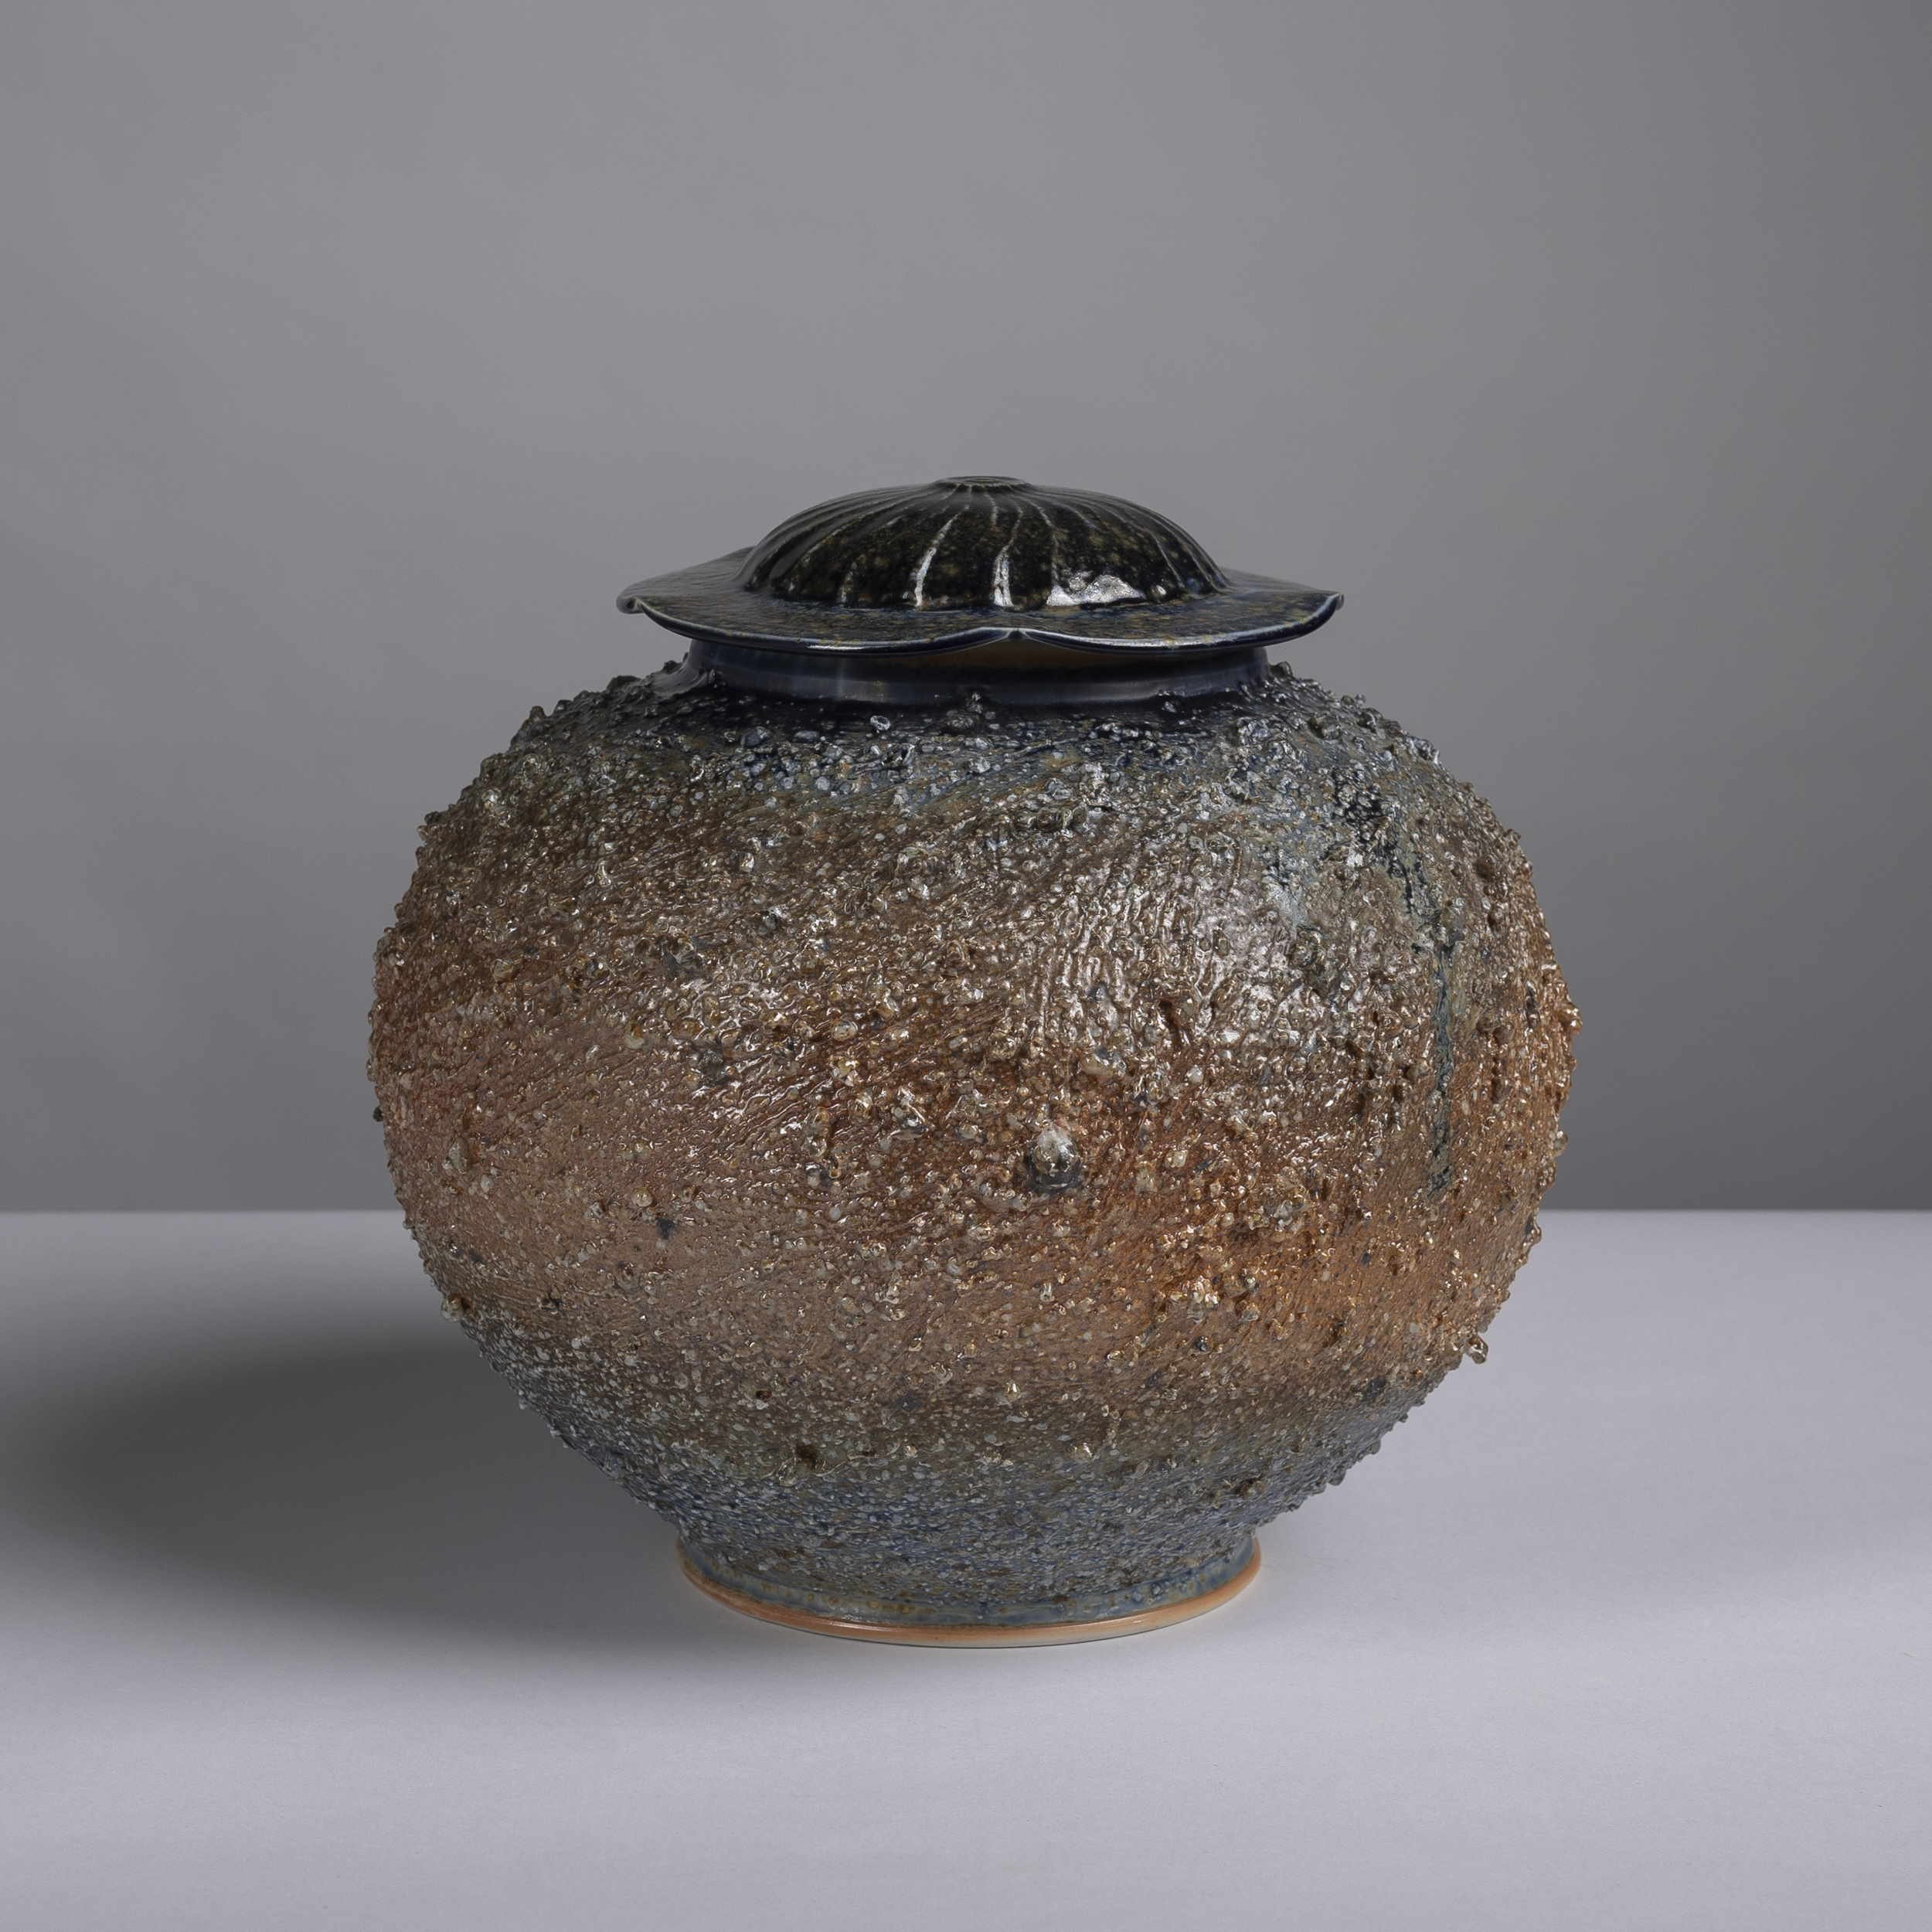  Joseph Panacci   Granite jar    Woodfired  26.5 cm ht 